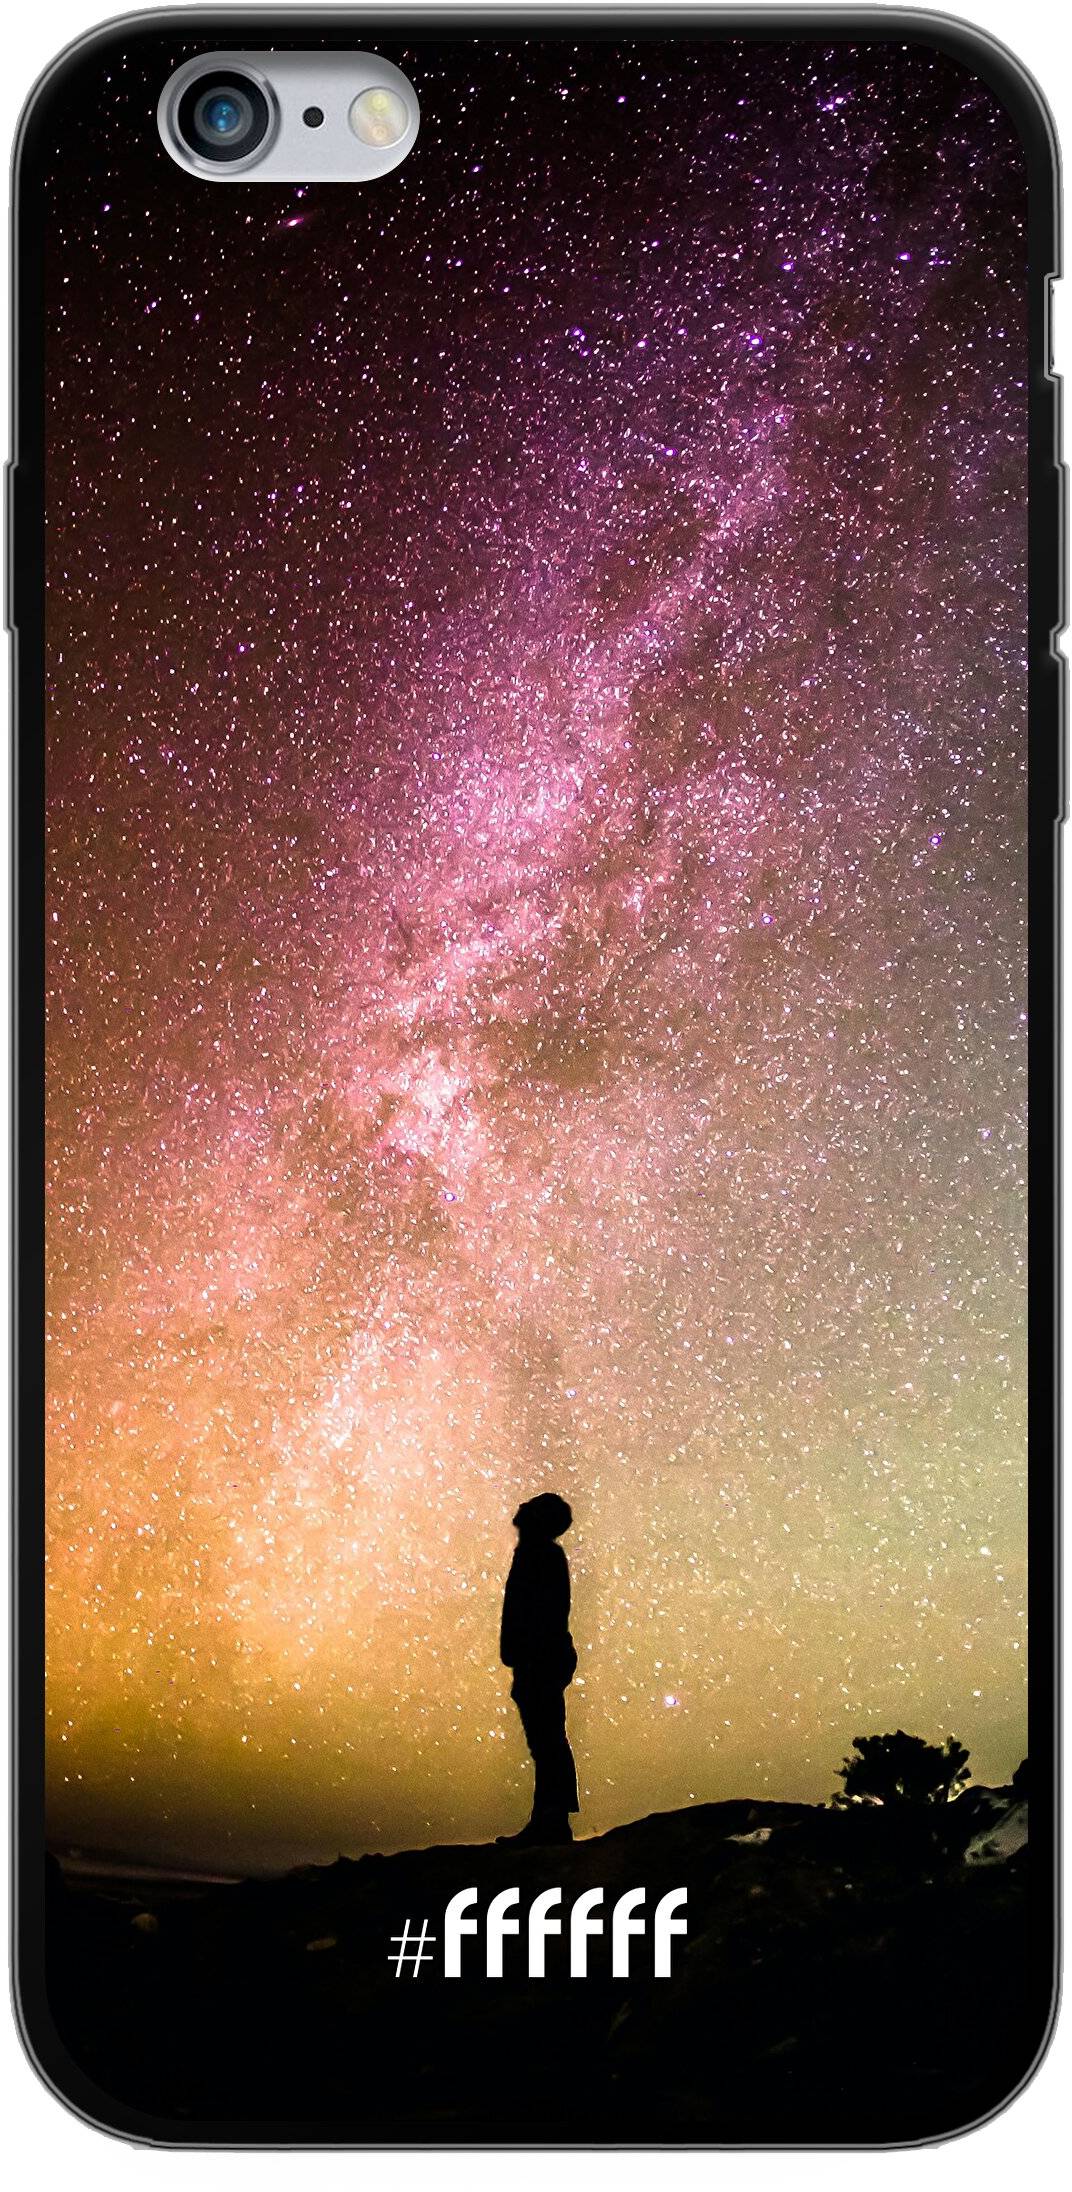 Watching the Stars iPhone 6